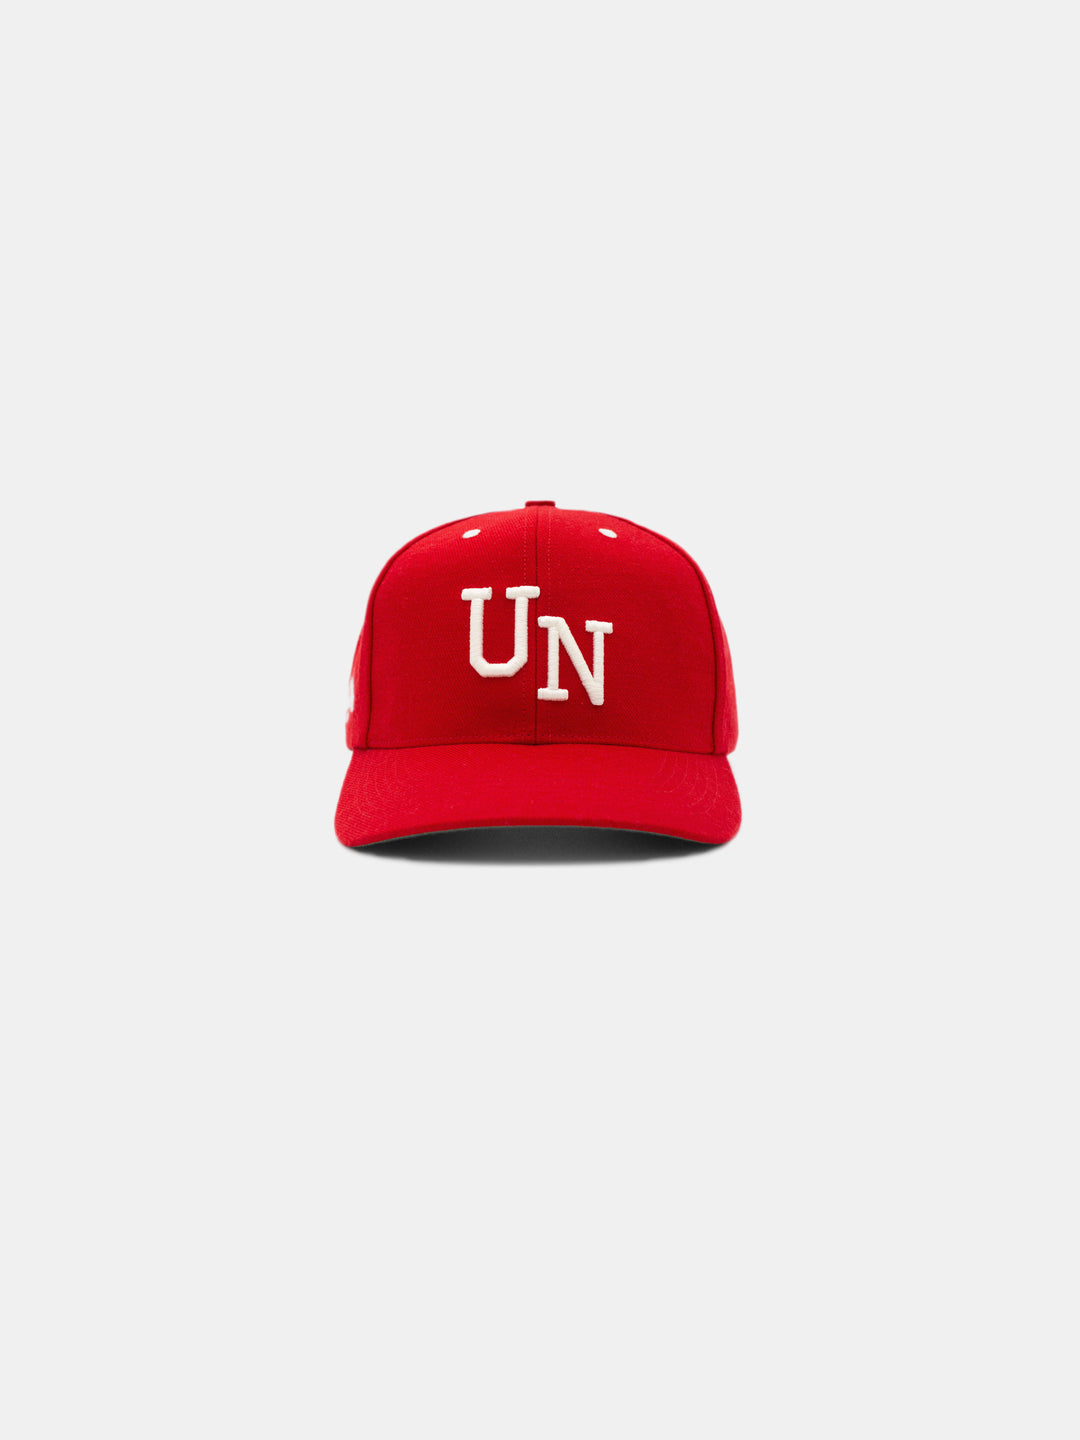 Chosen UN Snapback Hat Red/White - Front